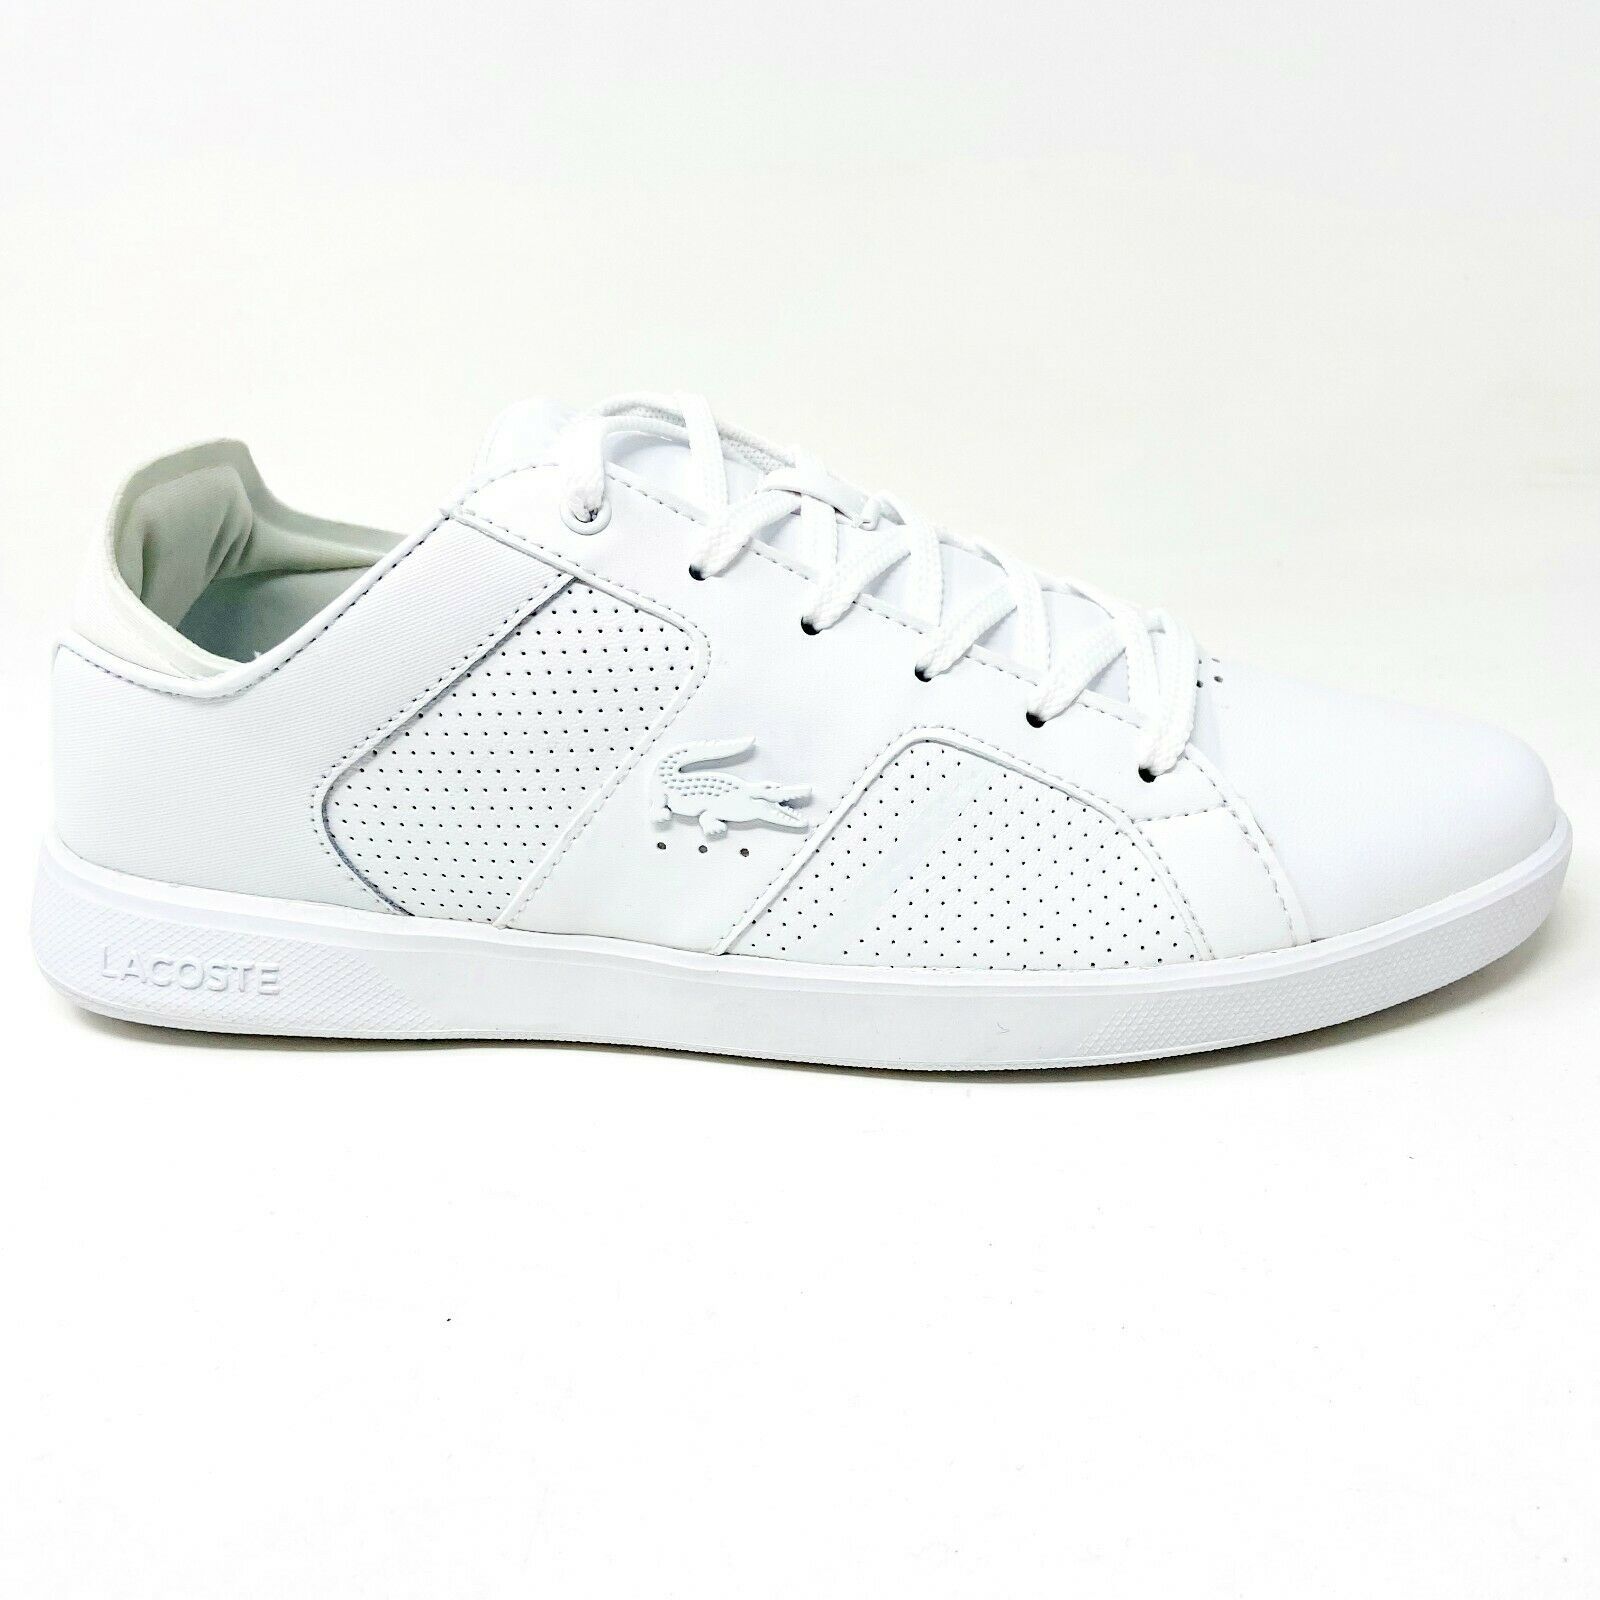 Lacoste Novas 120 3 SMA Leather White Mens Casual Shoes